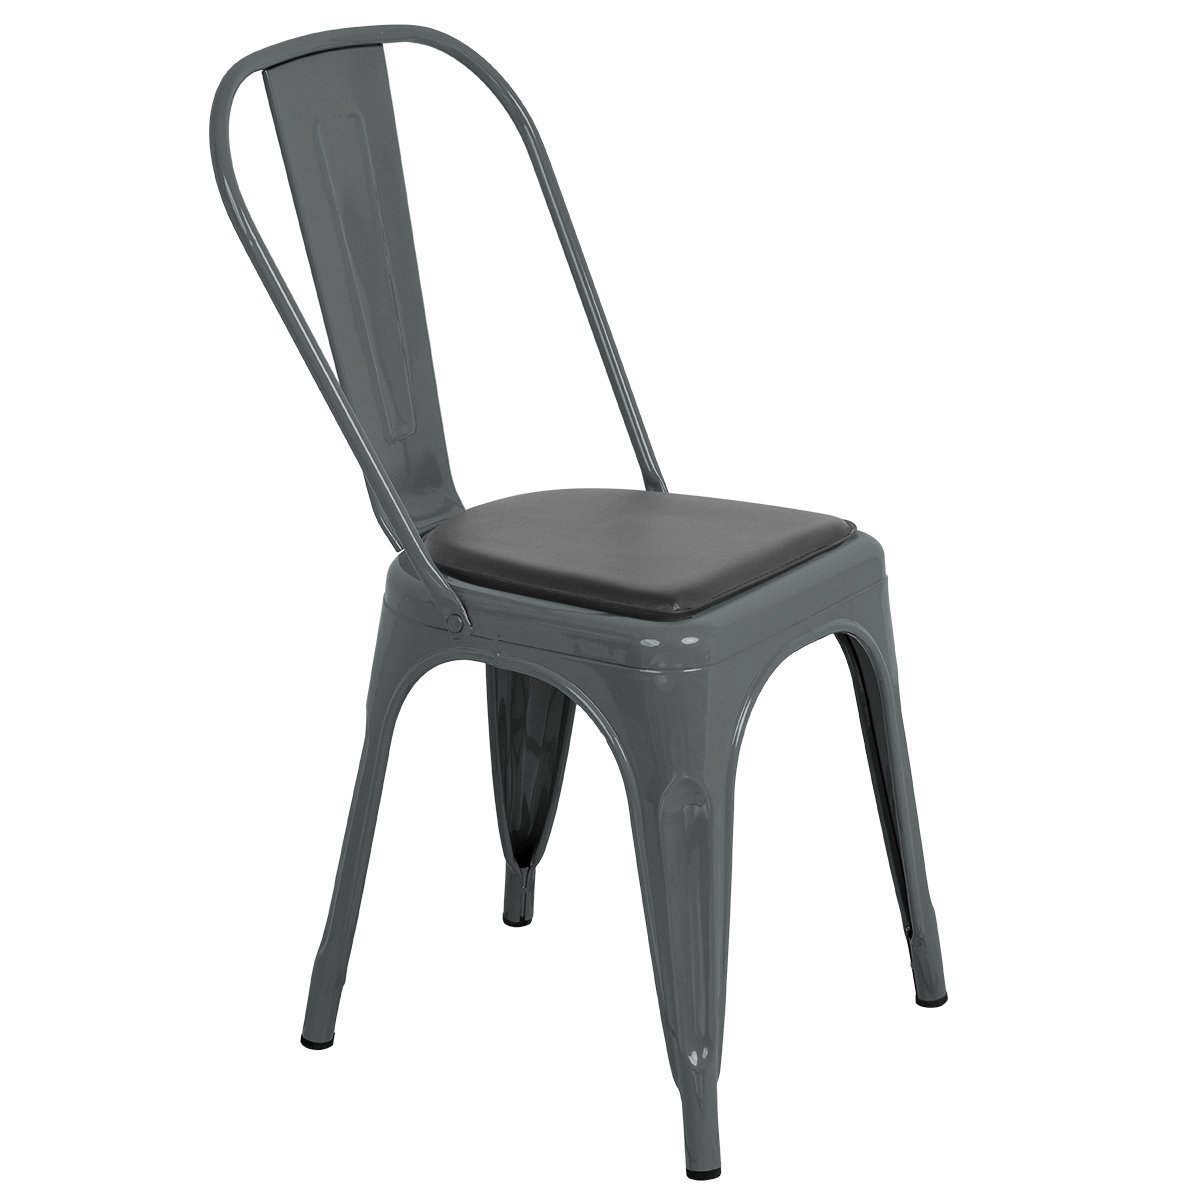 Cadeira Iron Tolix design industrial com almofada - 1